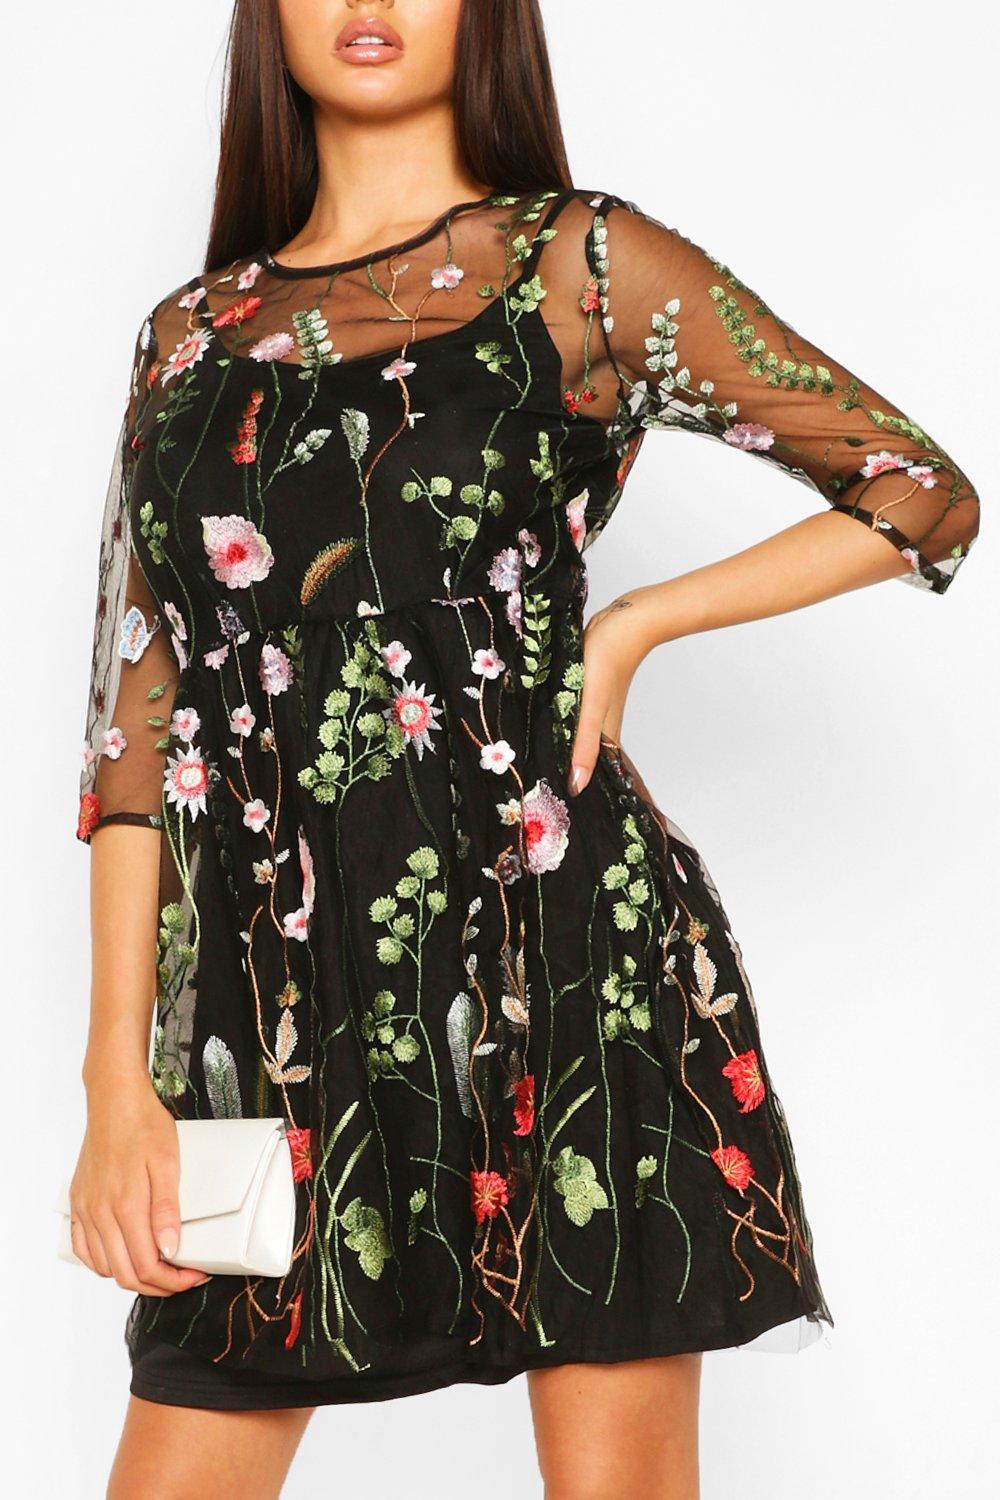 floral overlay dress